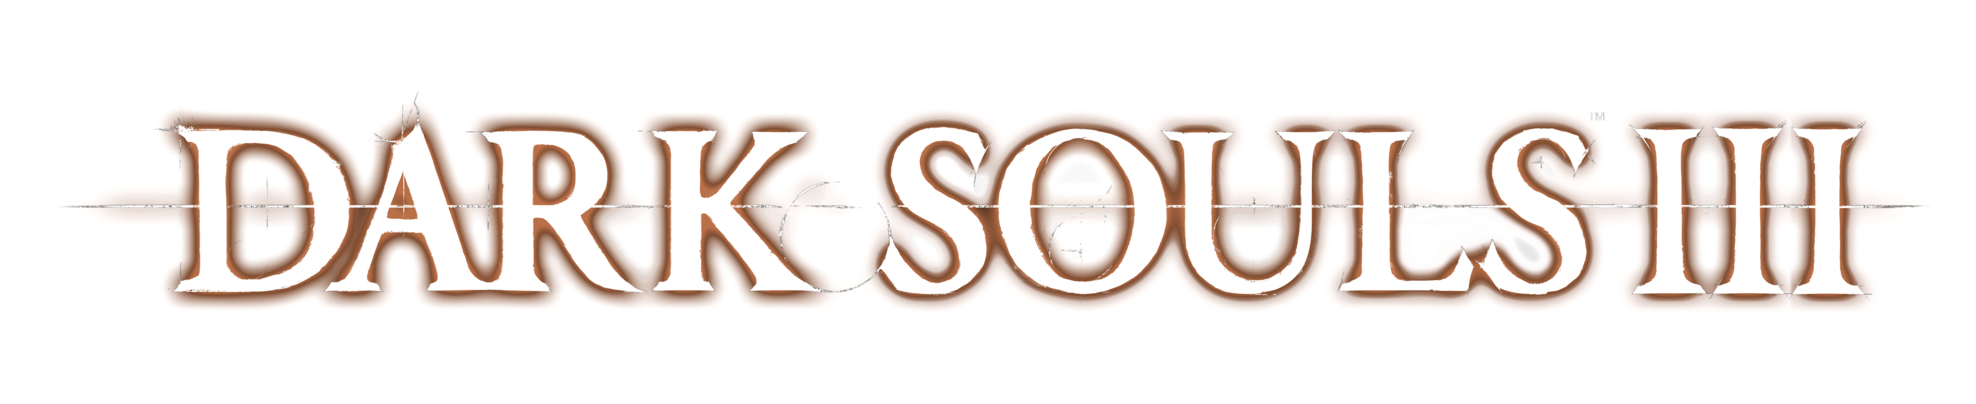 Dark Souls Logo PNG Image